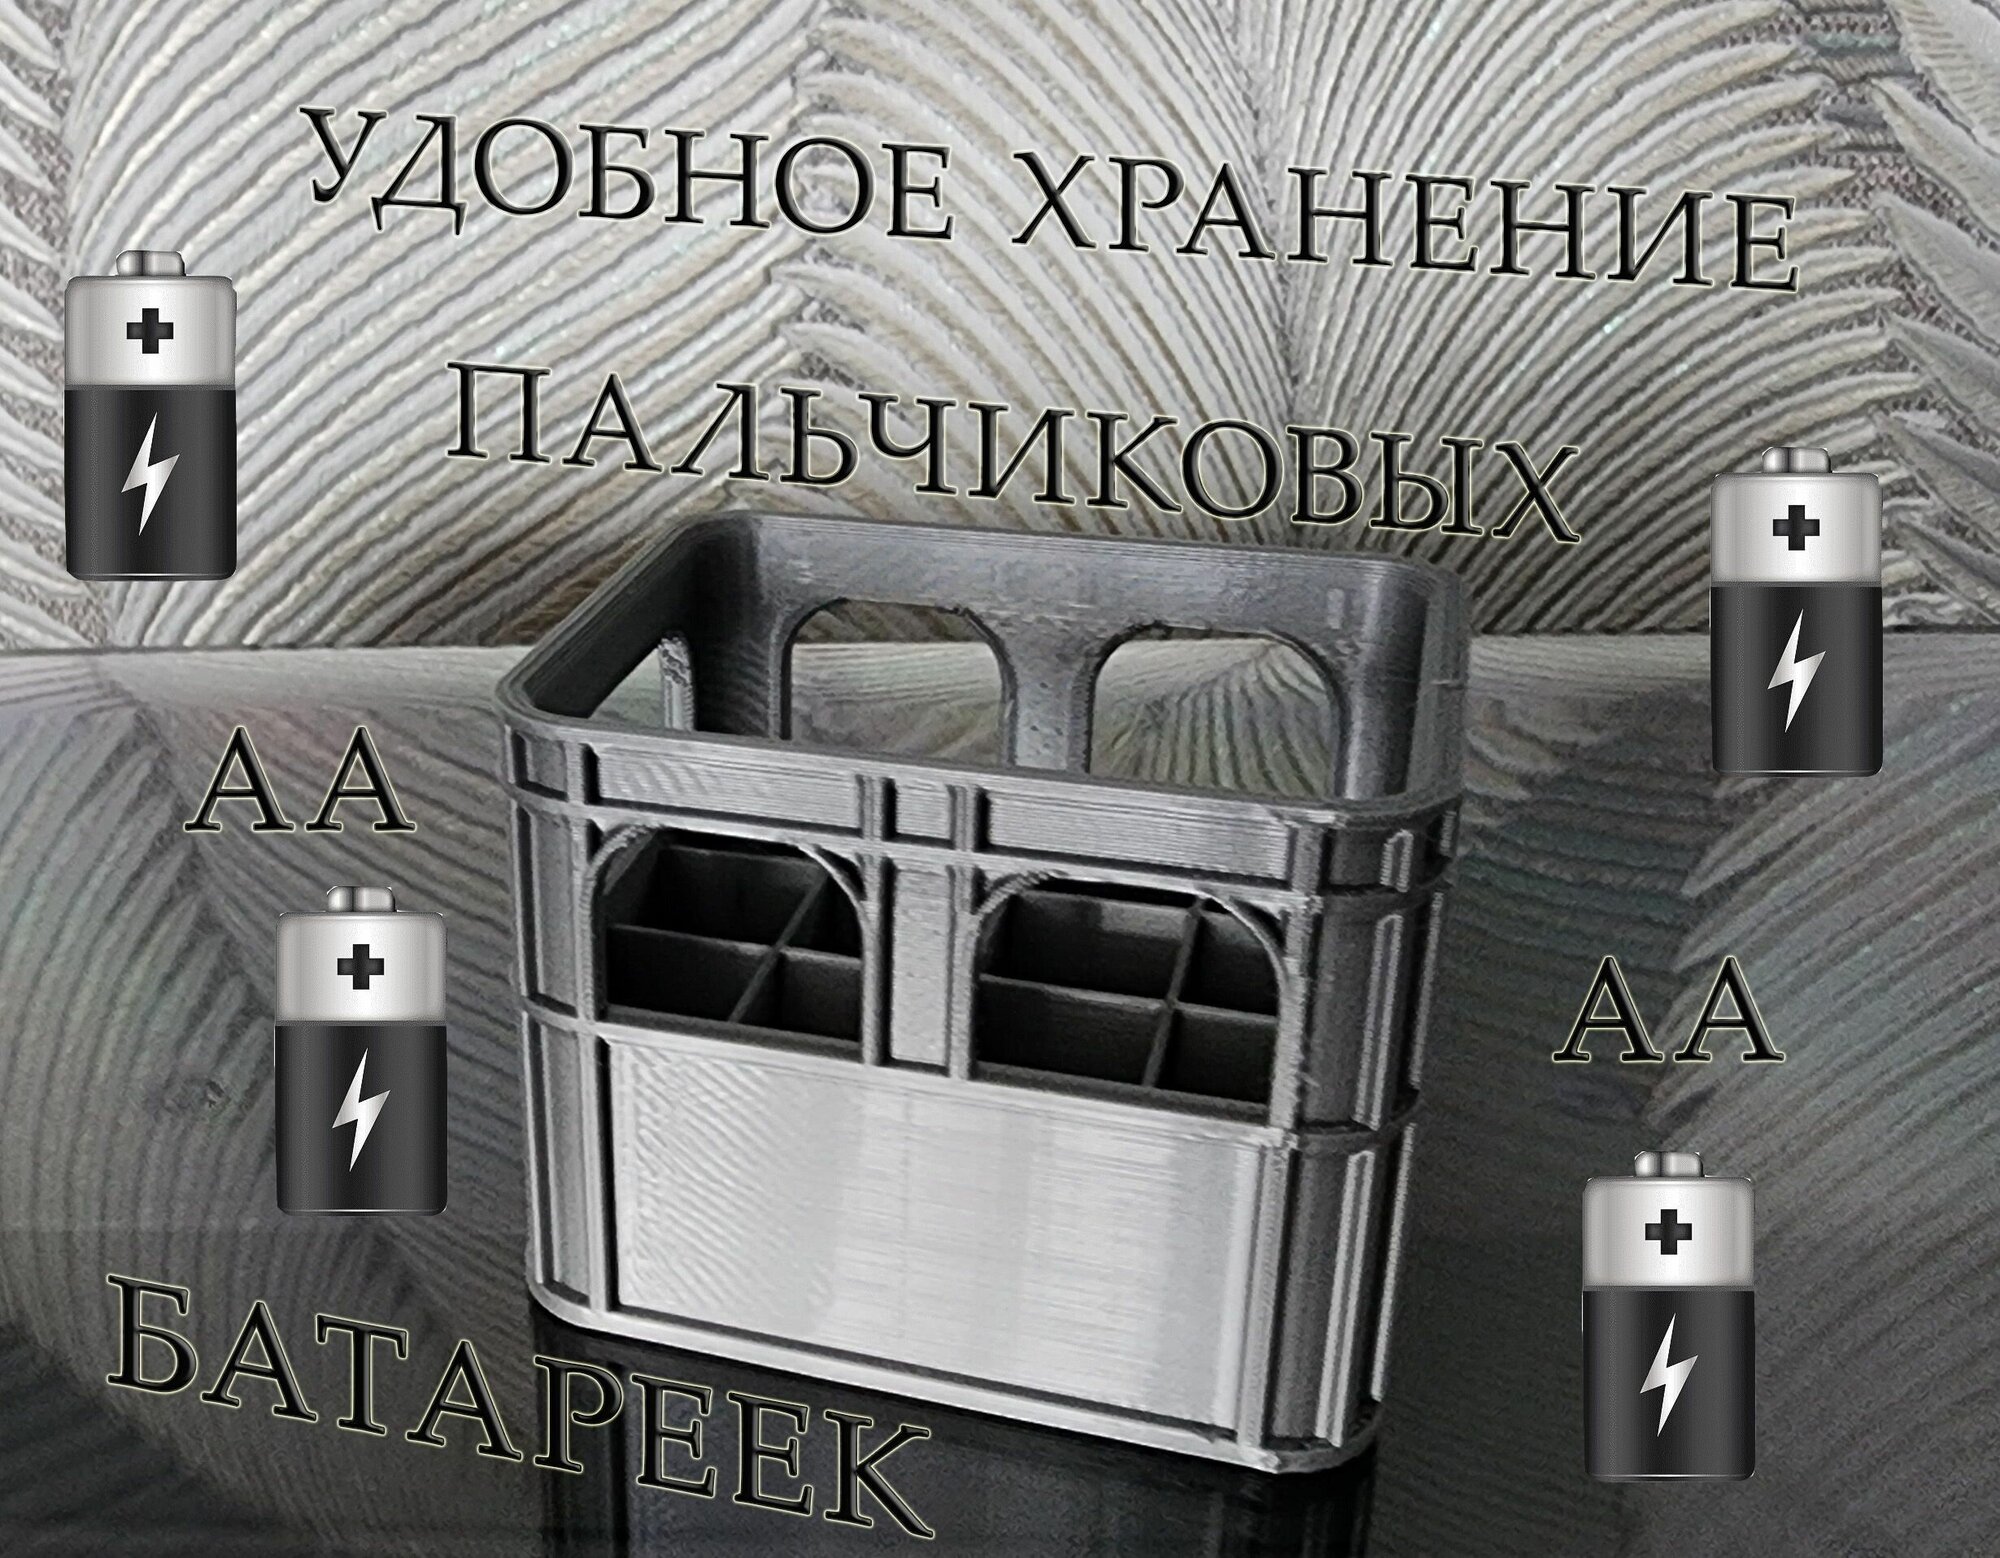 Органайзер/контейнер для хранения батареек типа АА, серебристый, 12 секций - фотография № 1